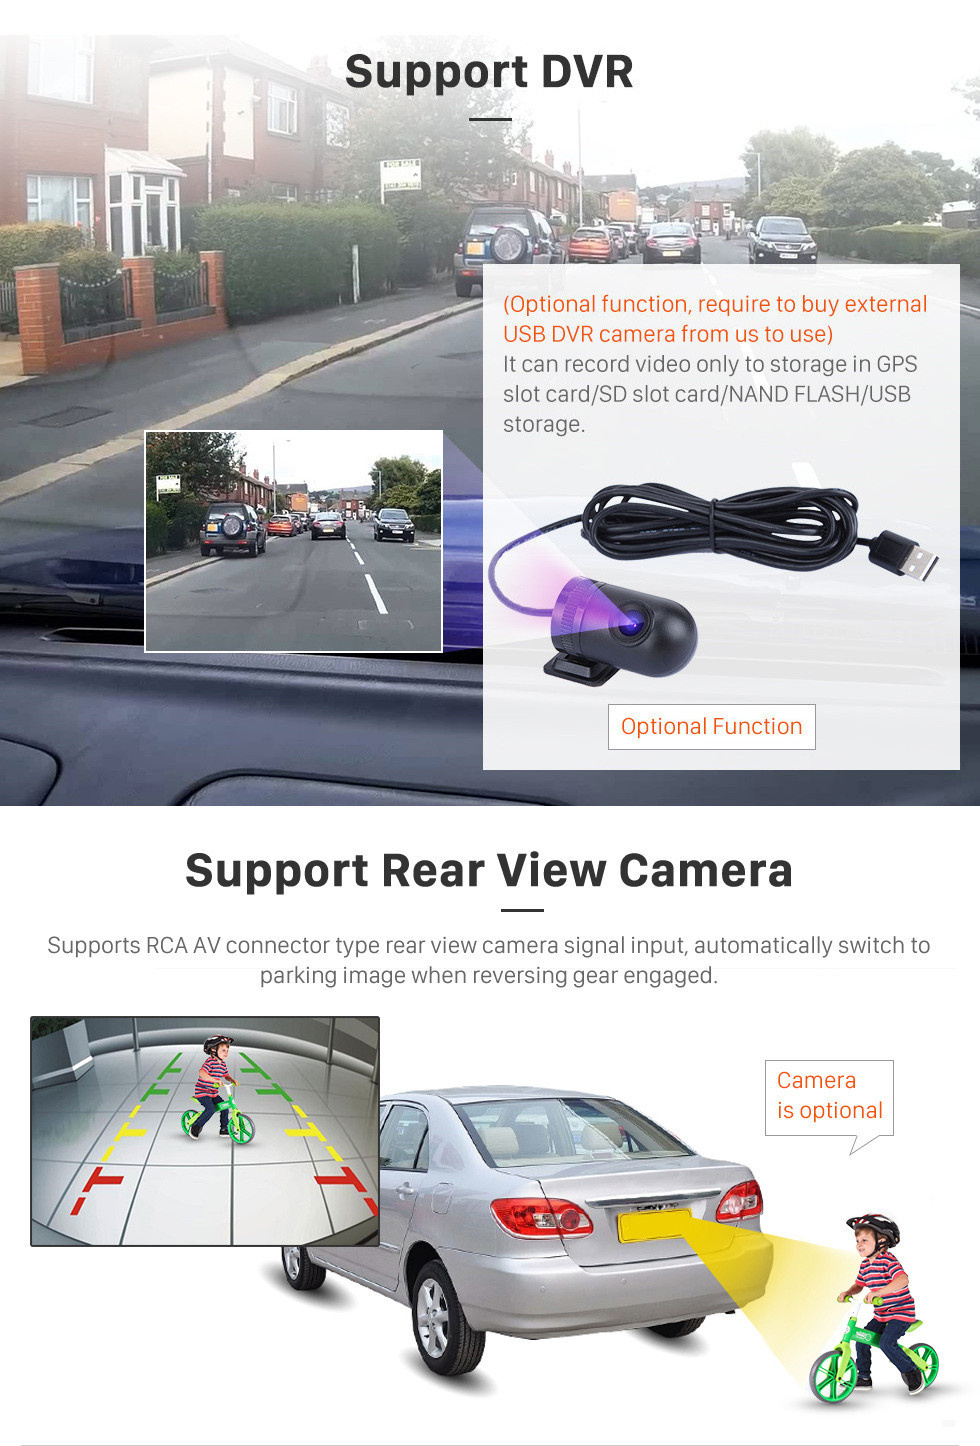 Seicane Pantalla táctil HD 2010-2017 Toyota ALZA Android 11.0 10.1 pulgadas Navegación GPS Radio Bluetooth USB Carplay WIFI AUX compatible DAB + OBD2 Control del volante